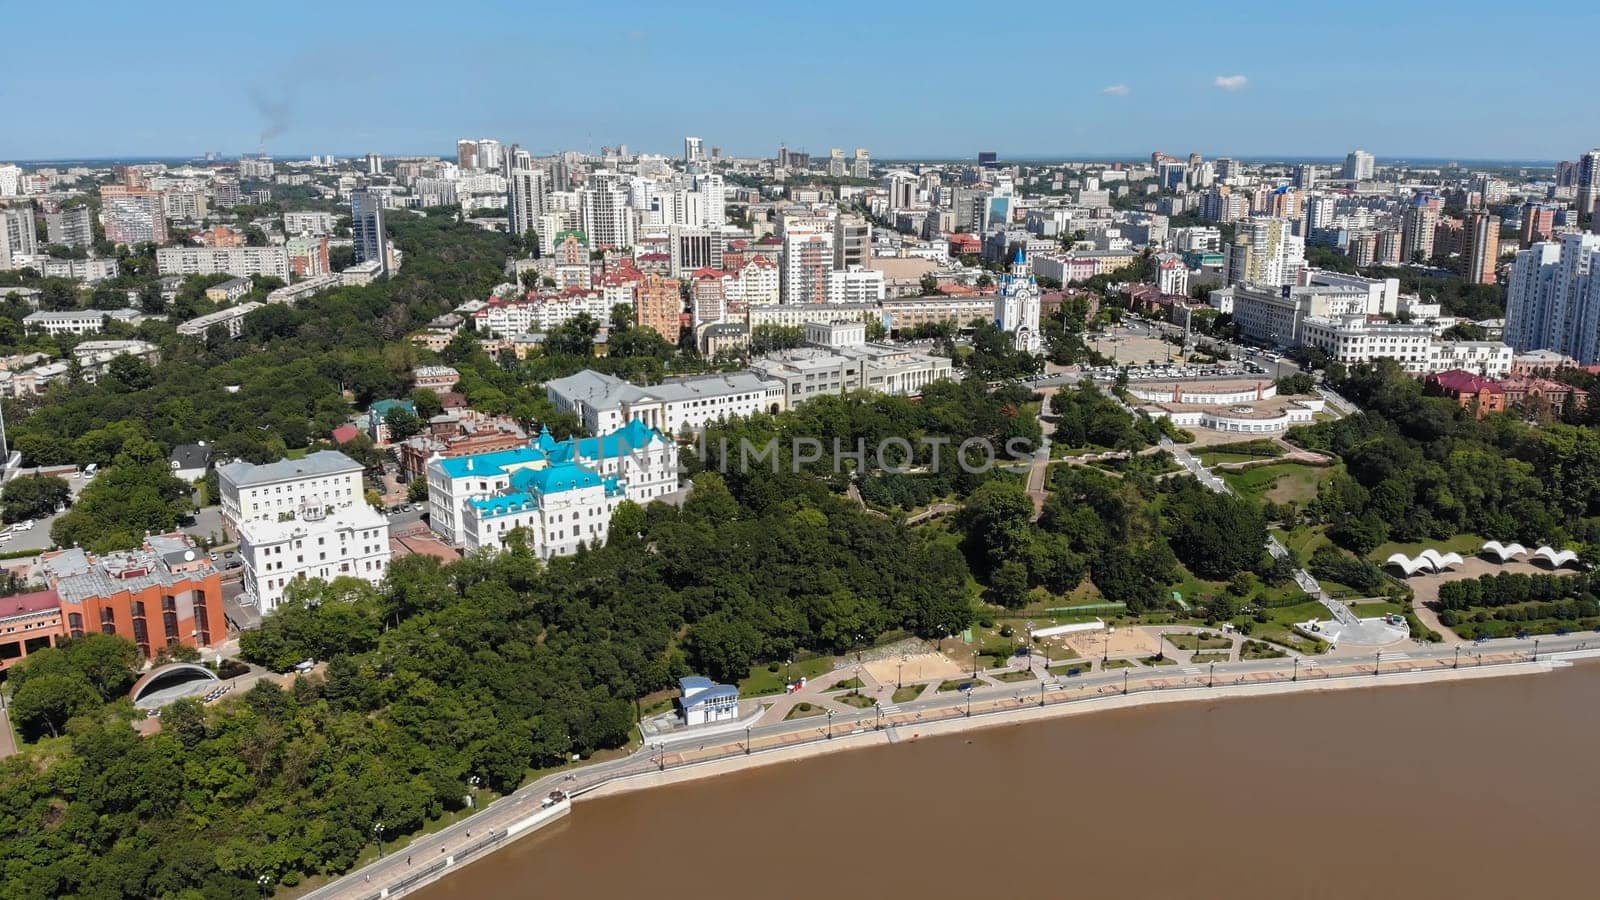 Khabarovsk city from a bird's-eye view